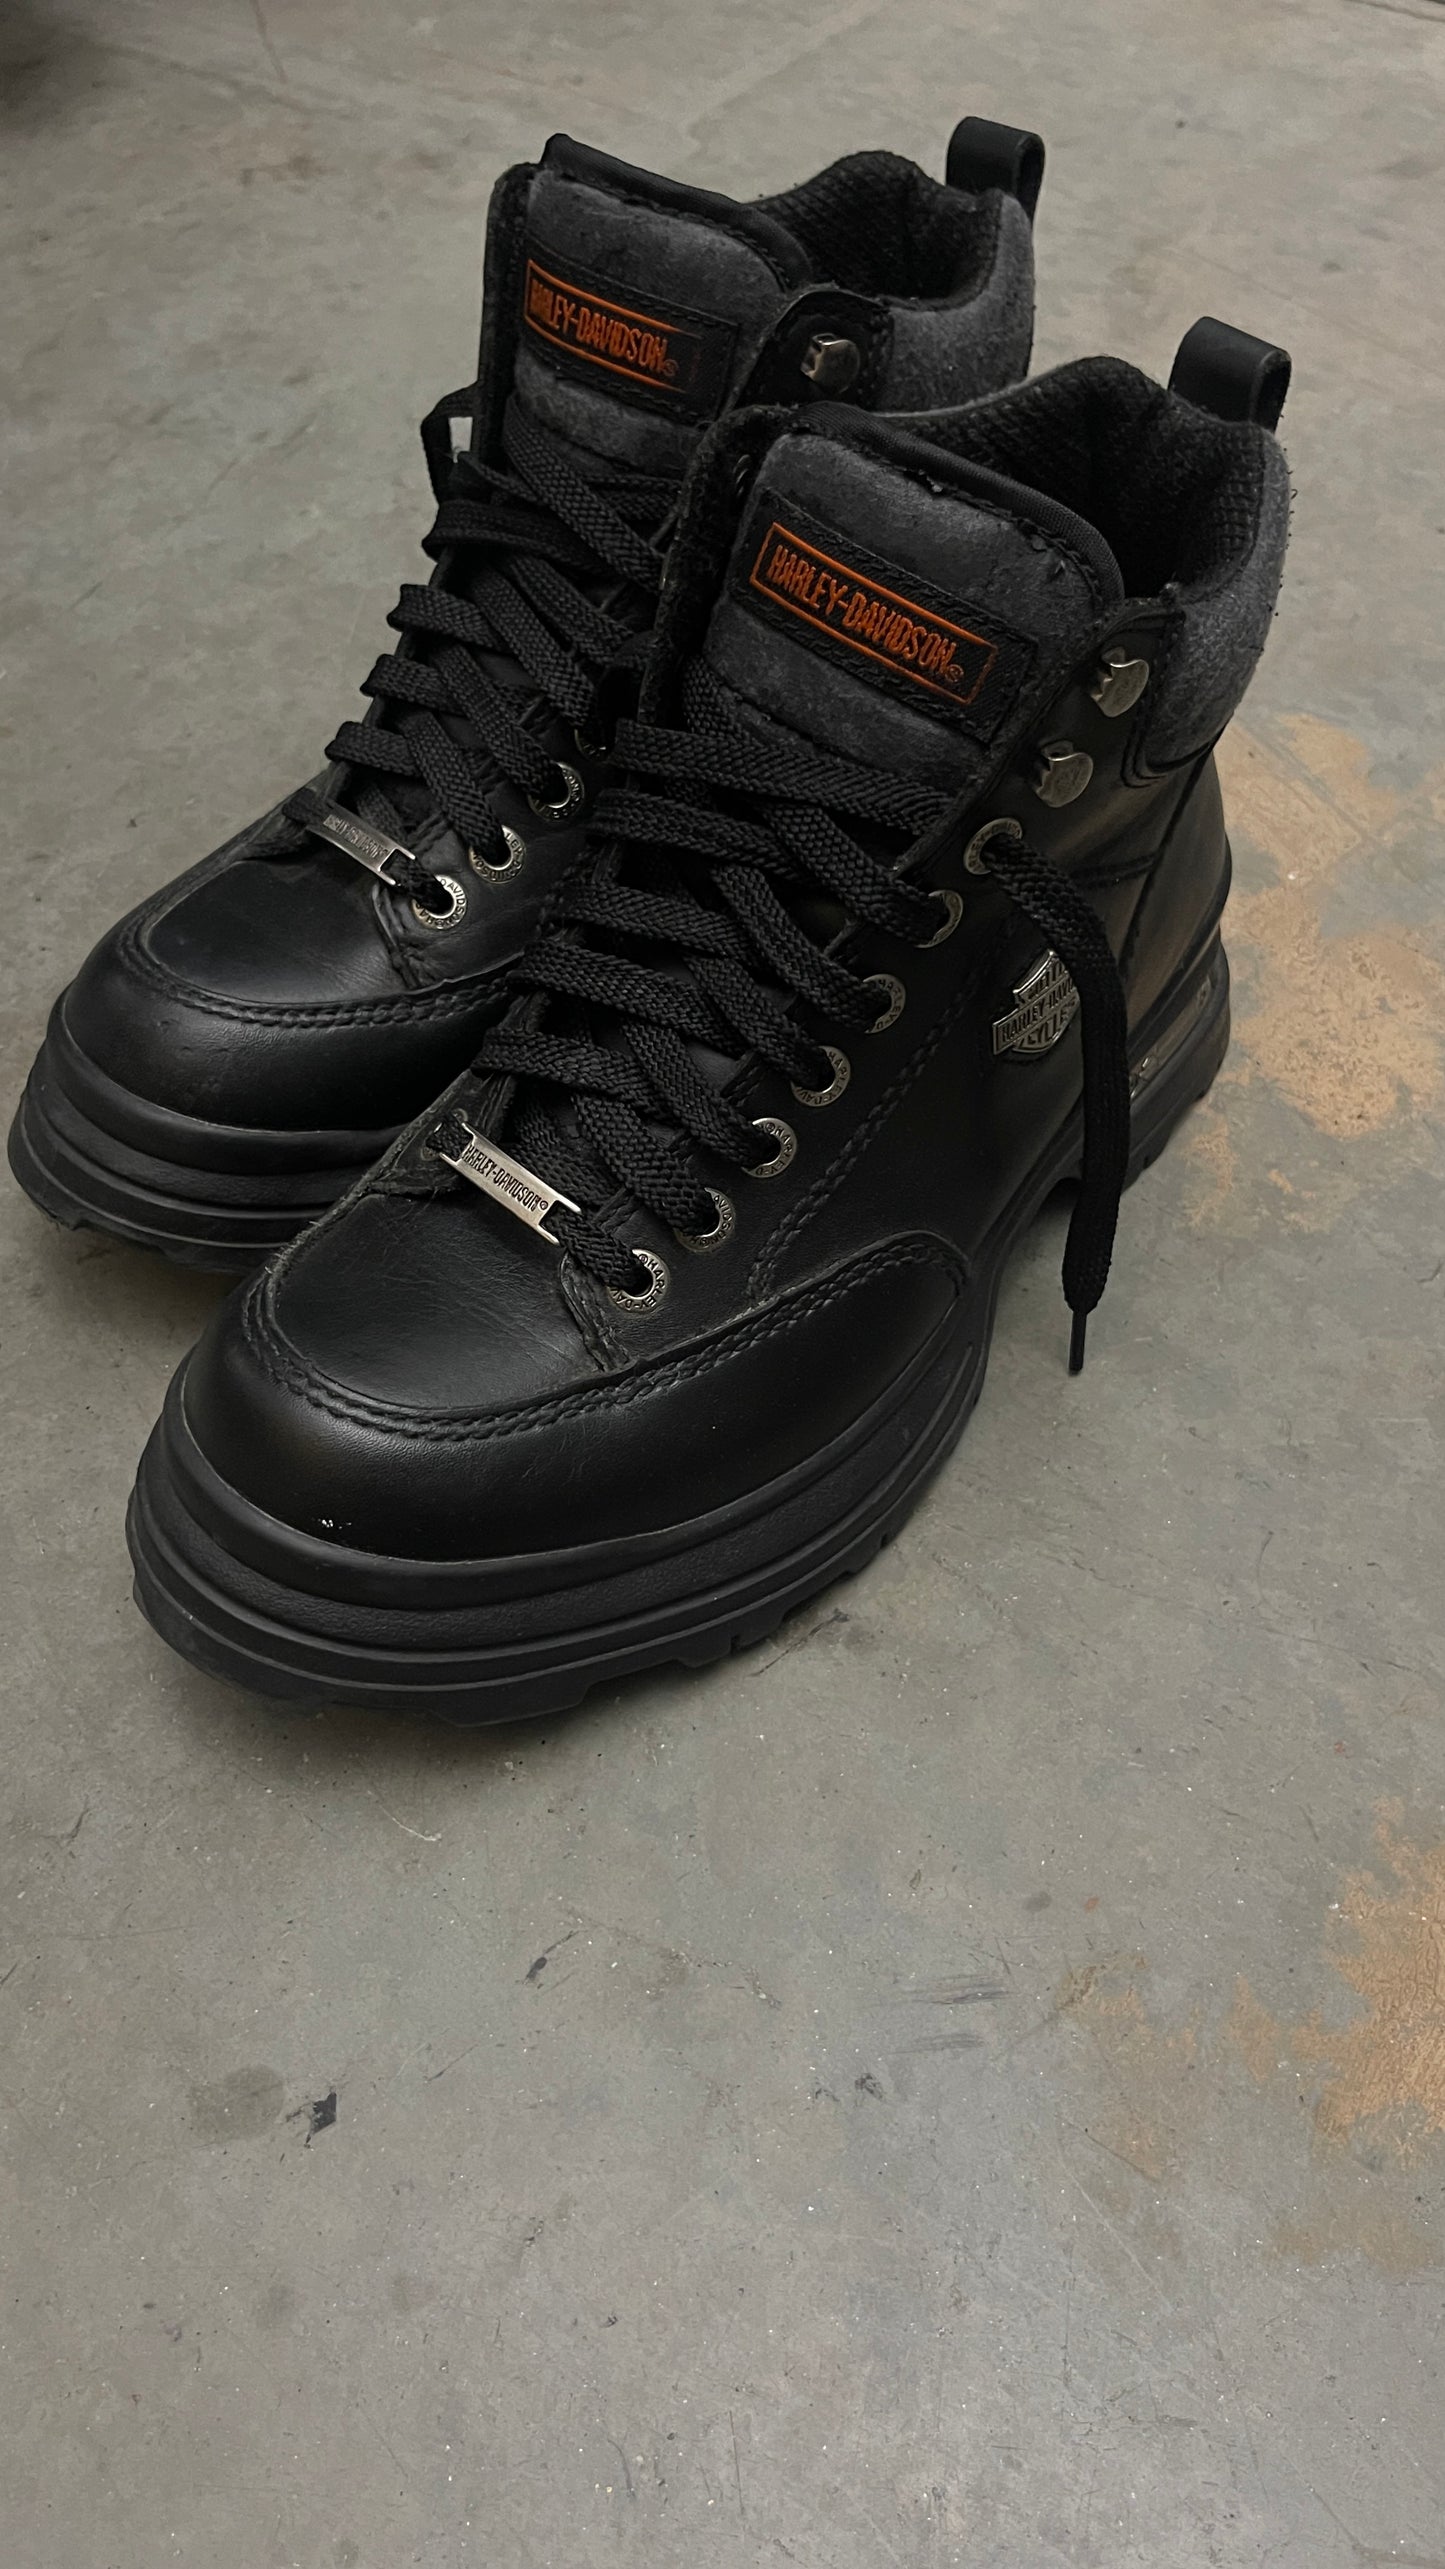 Harley Davidson Boots  Size: 8 1/2